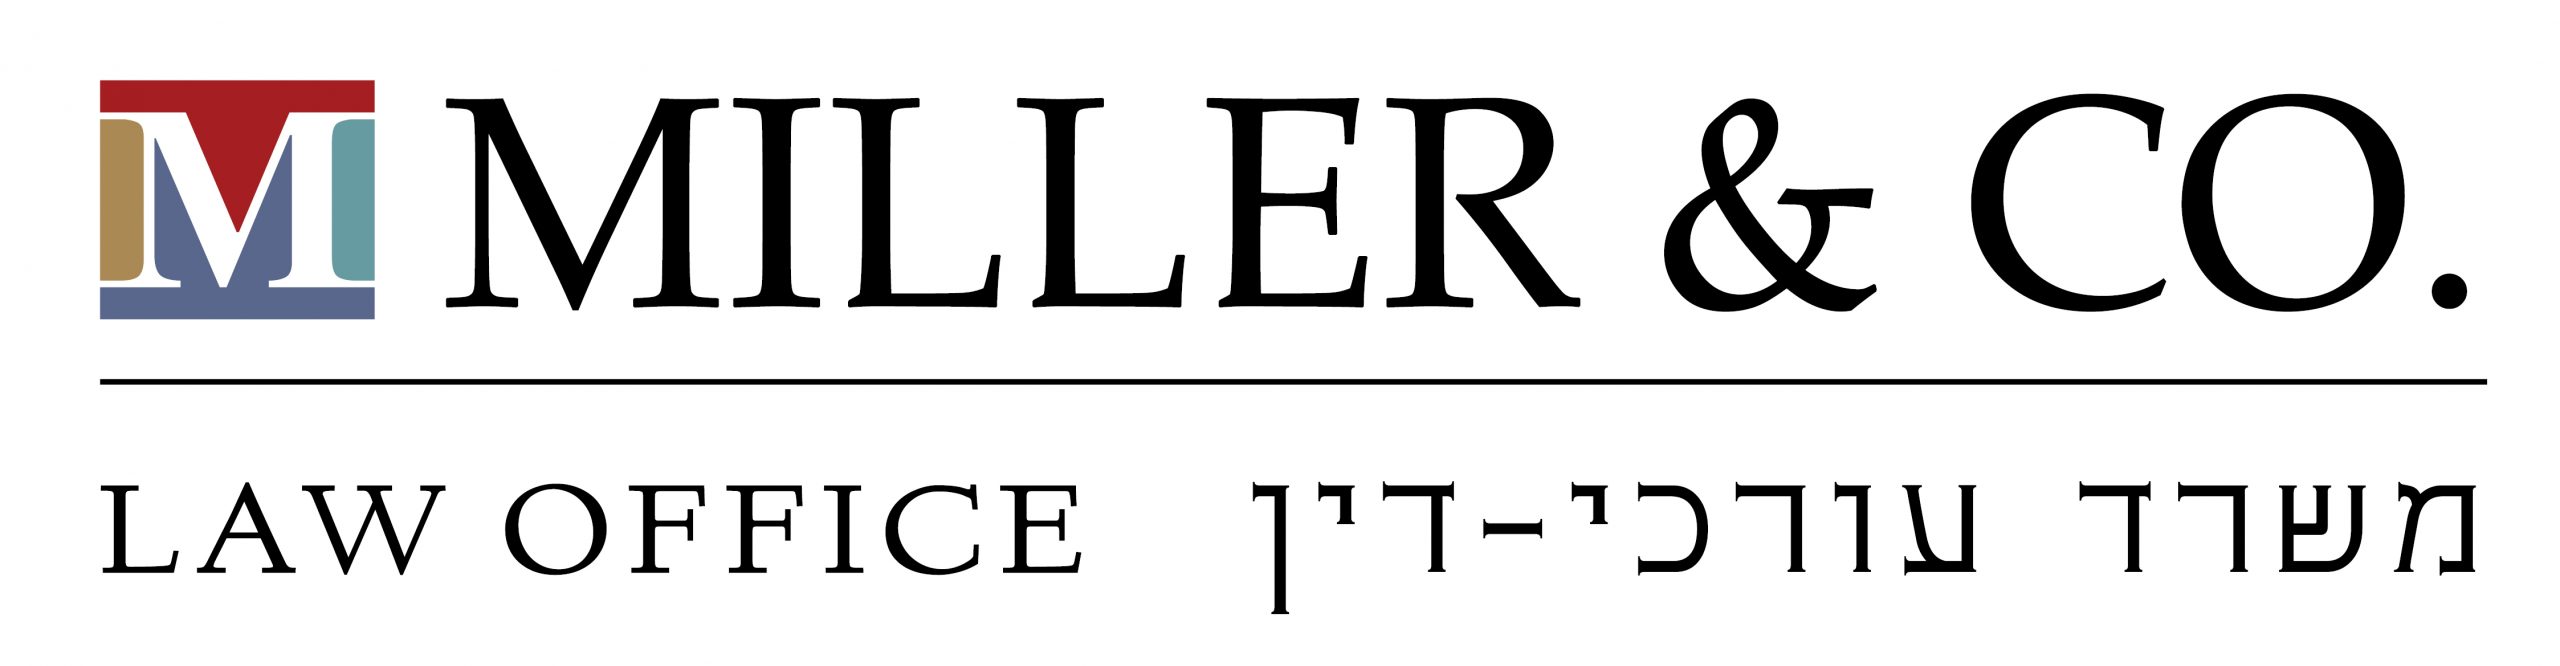 Miller & Co Law Office